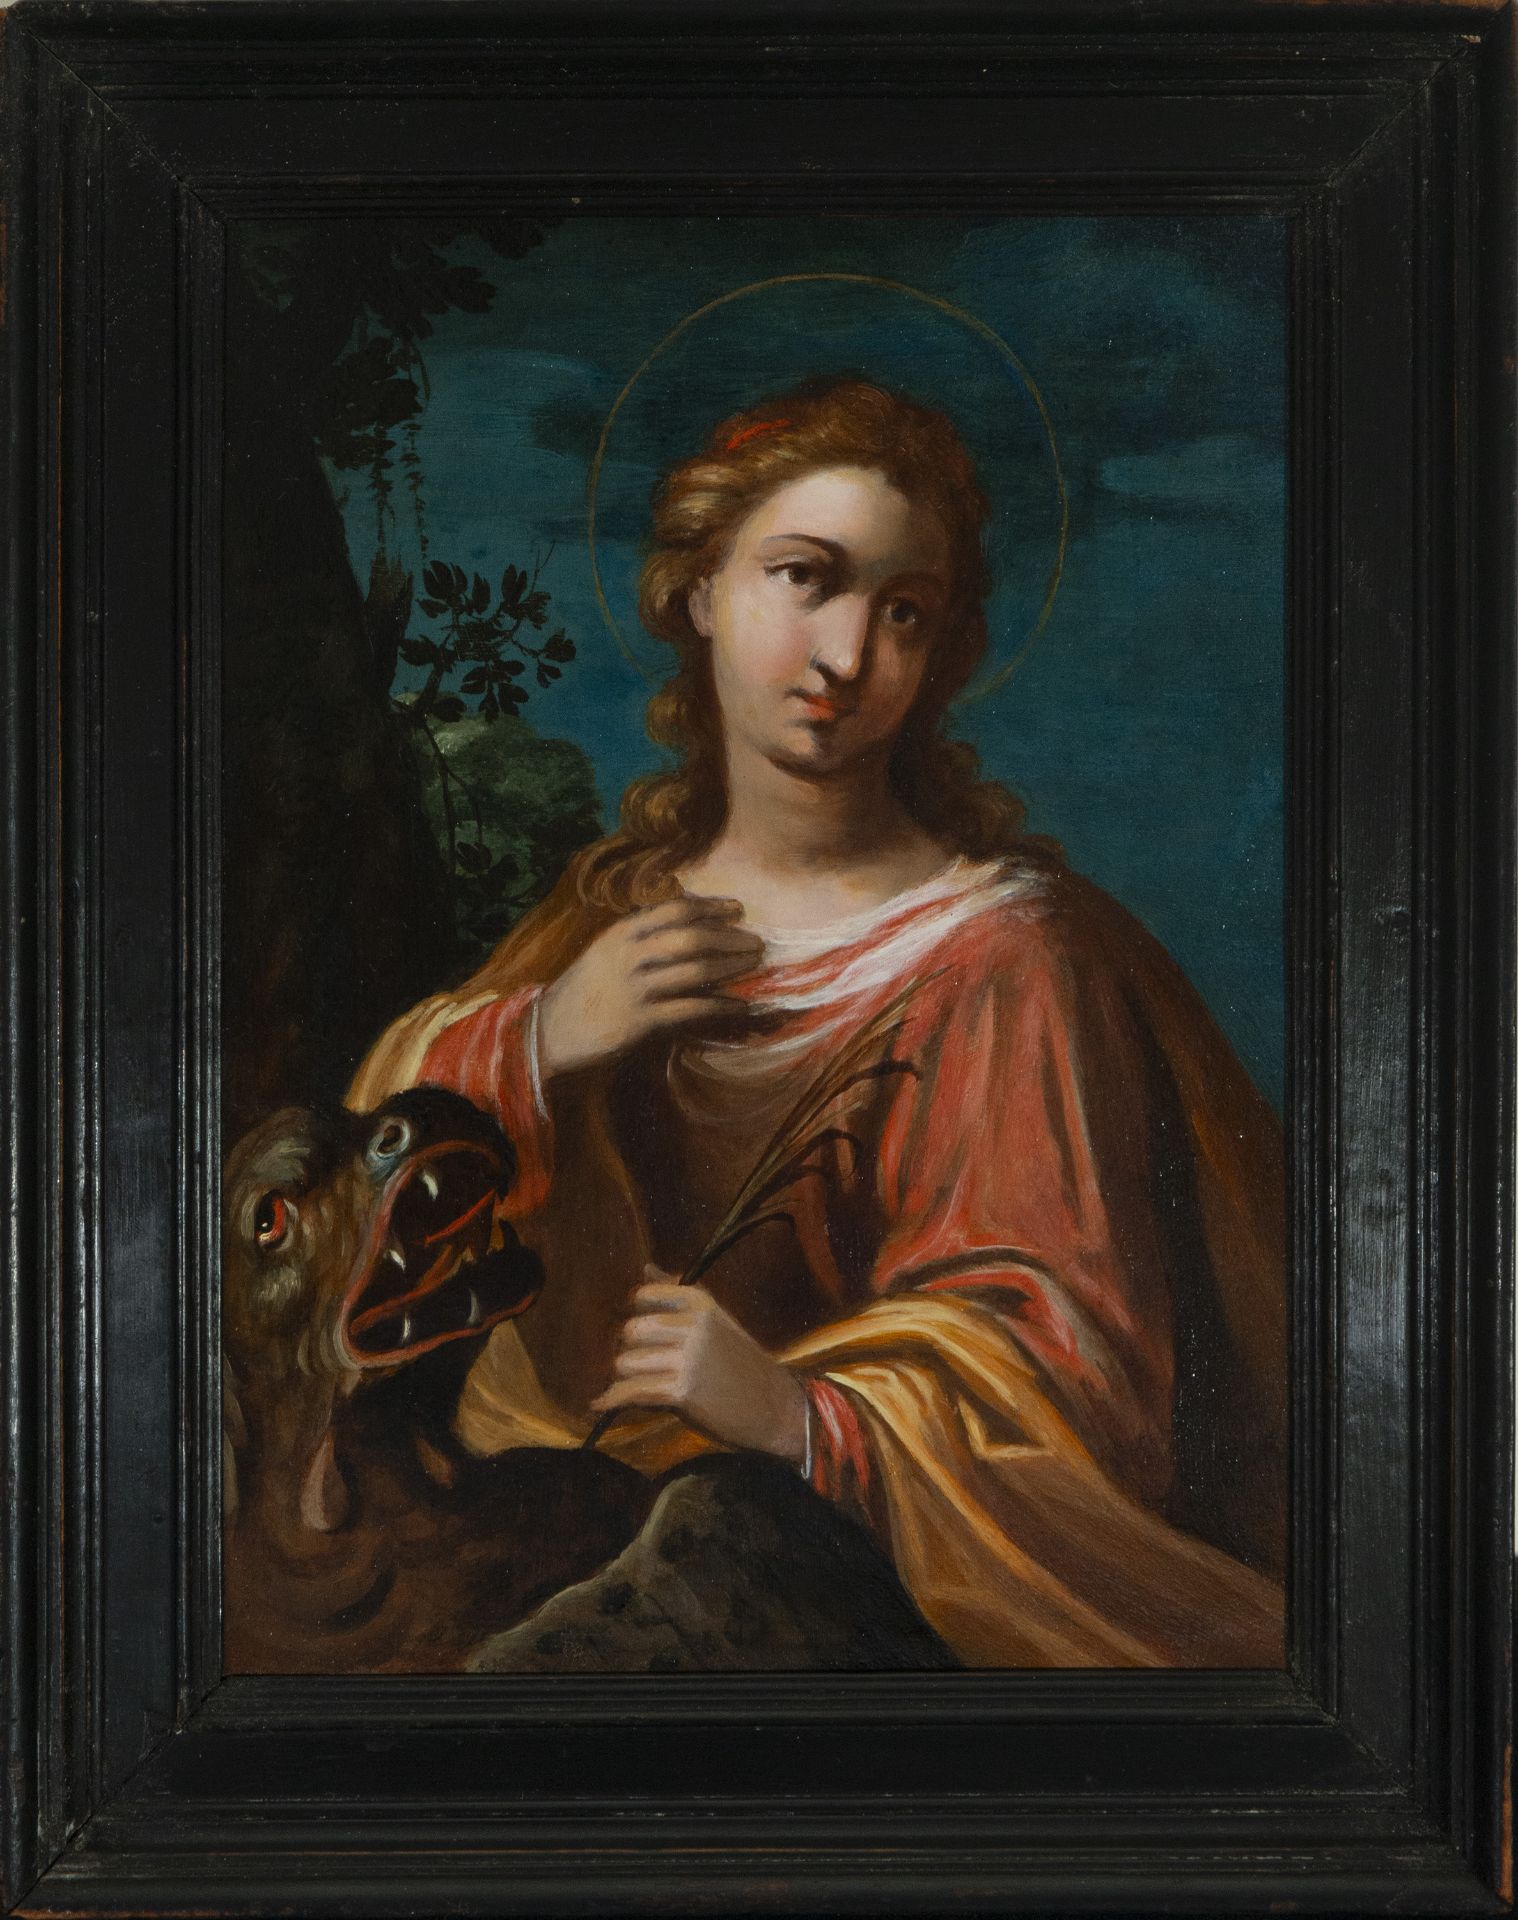 Saint Margaret of Antioch on copper. Flemish or Italian school of the 17th century